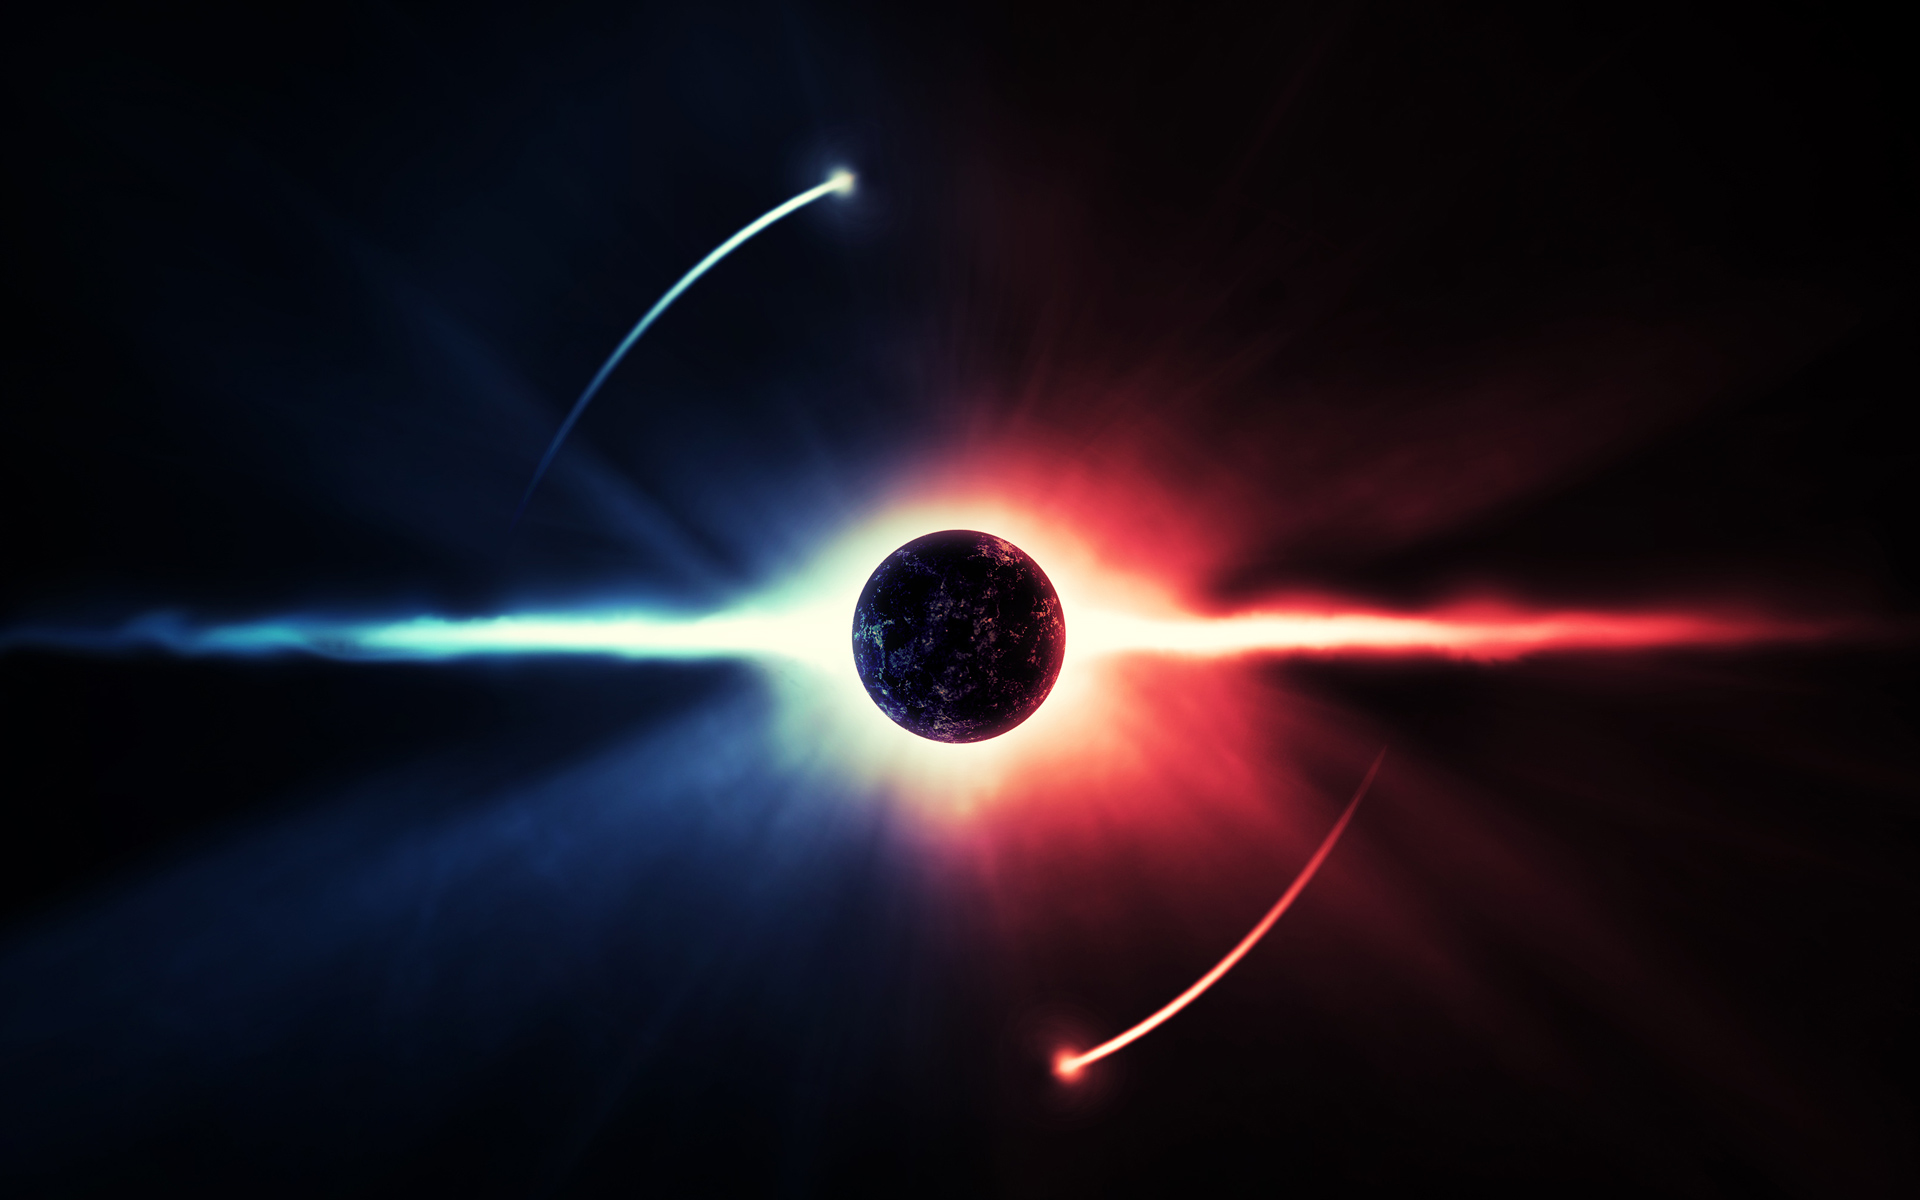 Solar Eclipse Wallpaper For Desktop